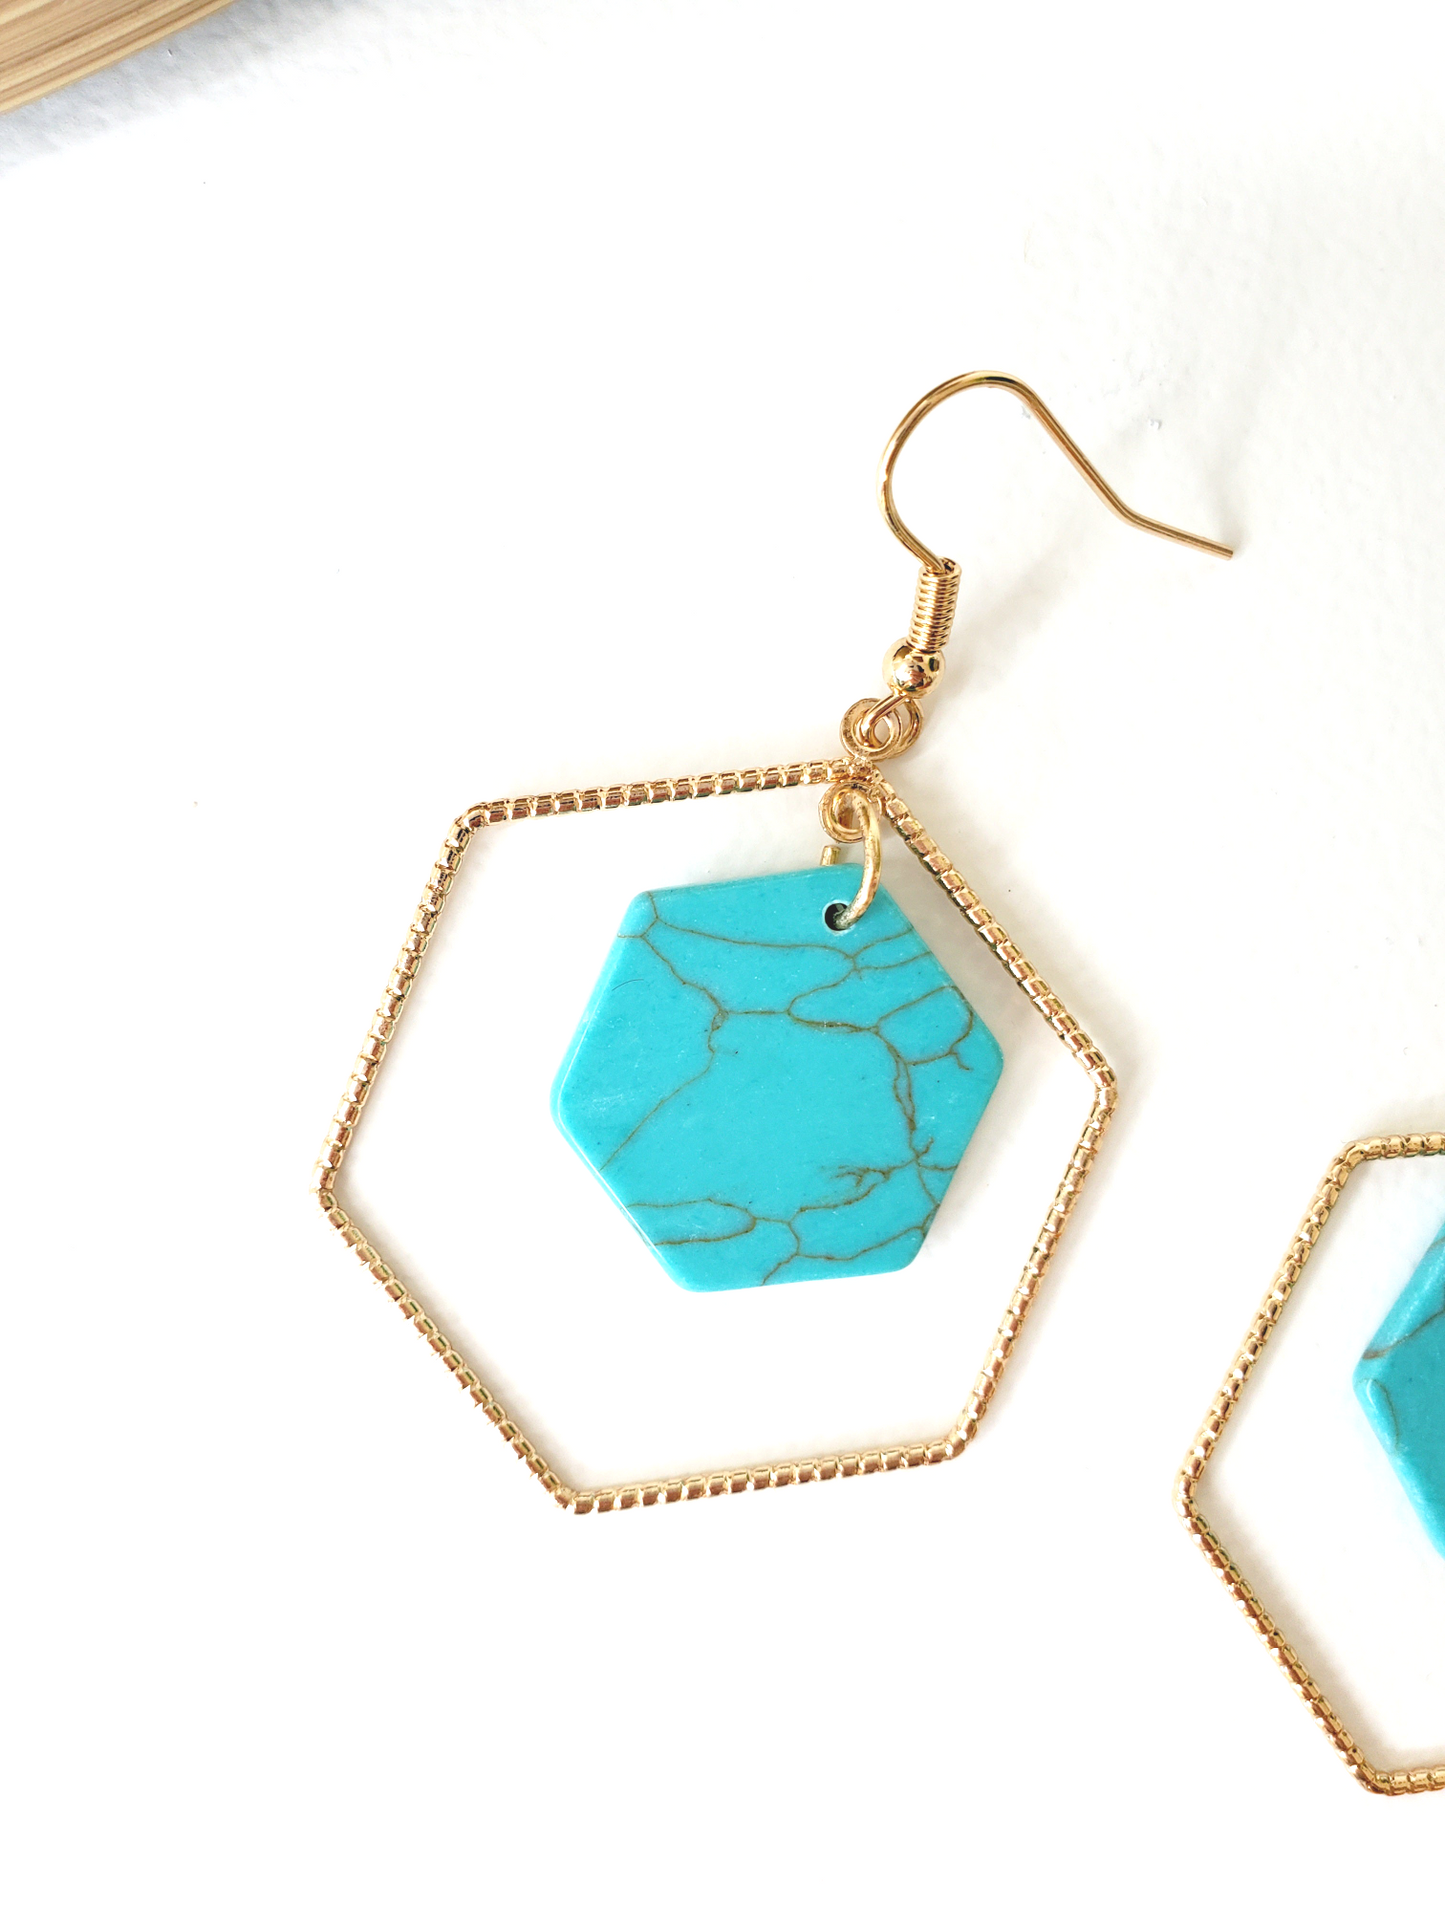 Turquoise & Gold Hexagon Earrings | Jewelry |